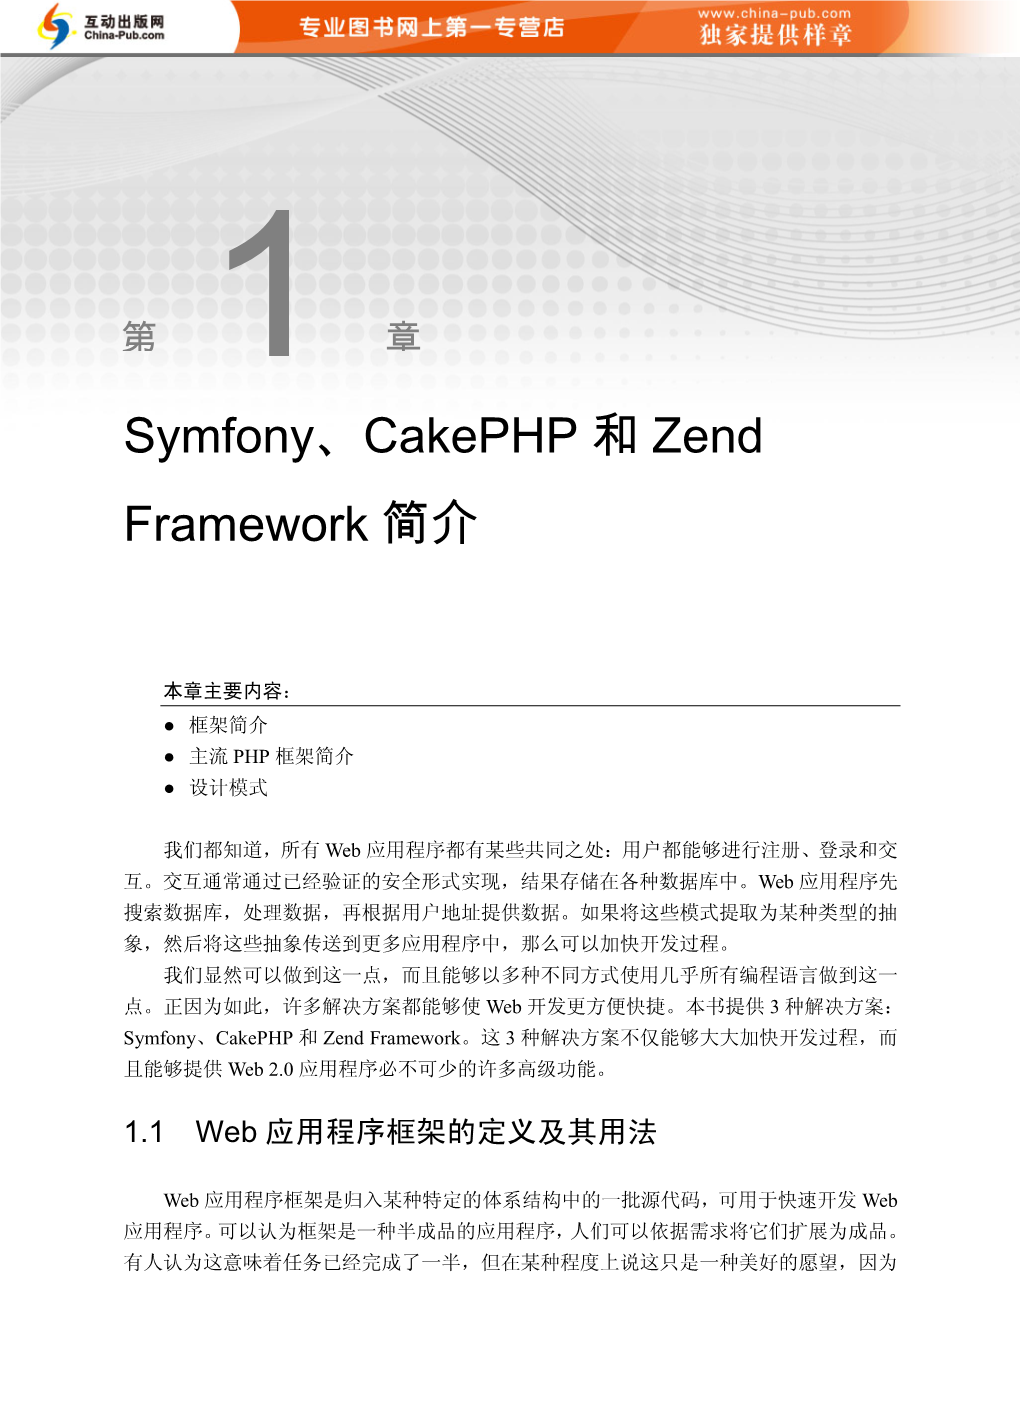 Symfony、Cakephp 和zend Framework 简介